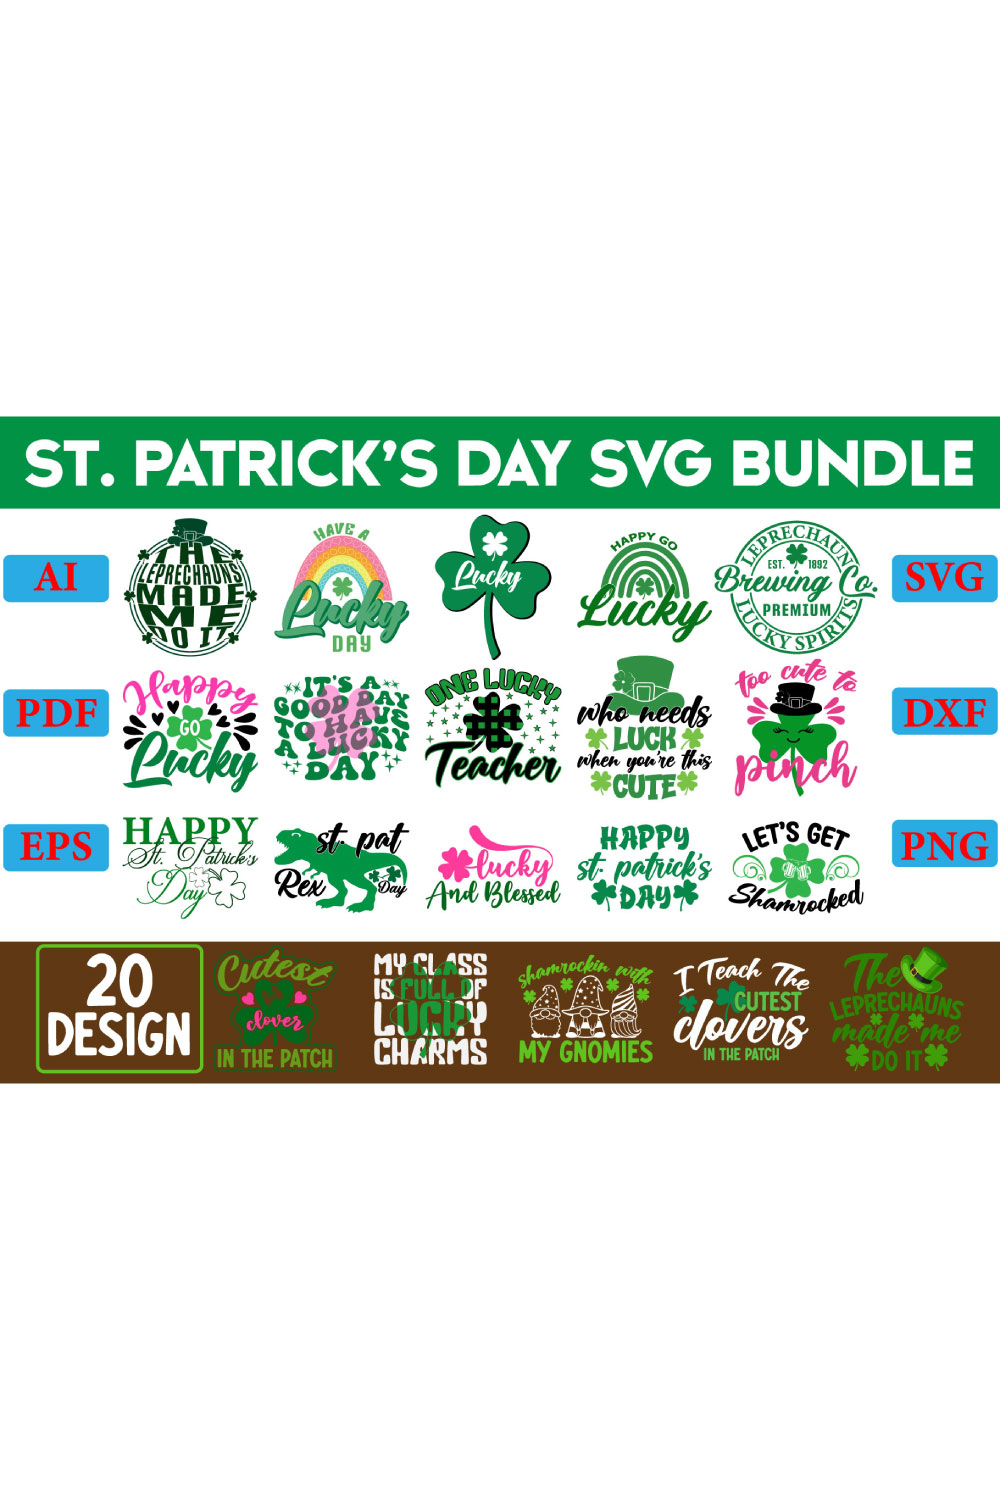 St Patrick’s Day Svg Bundle pinterest preview image.